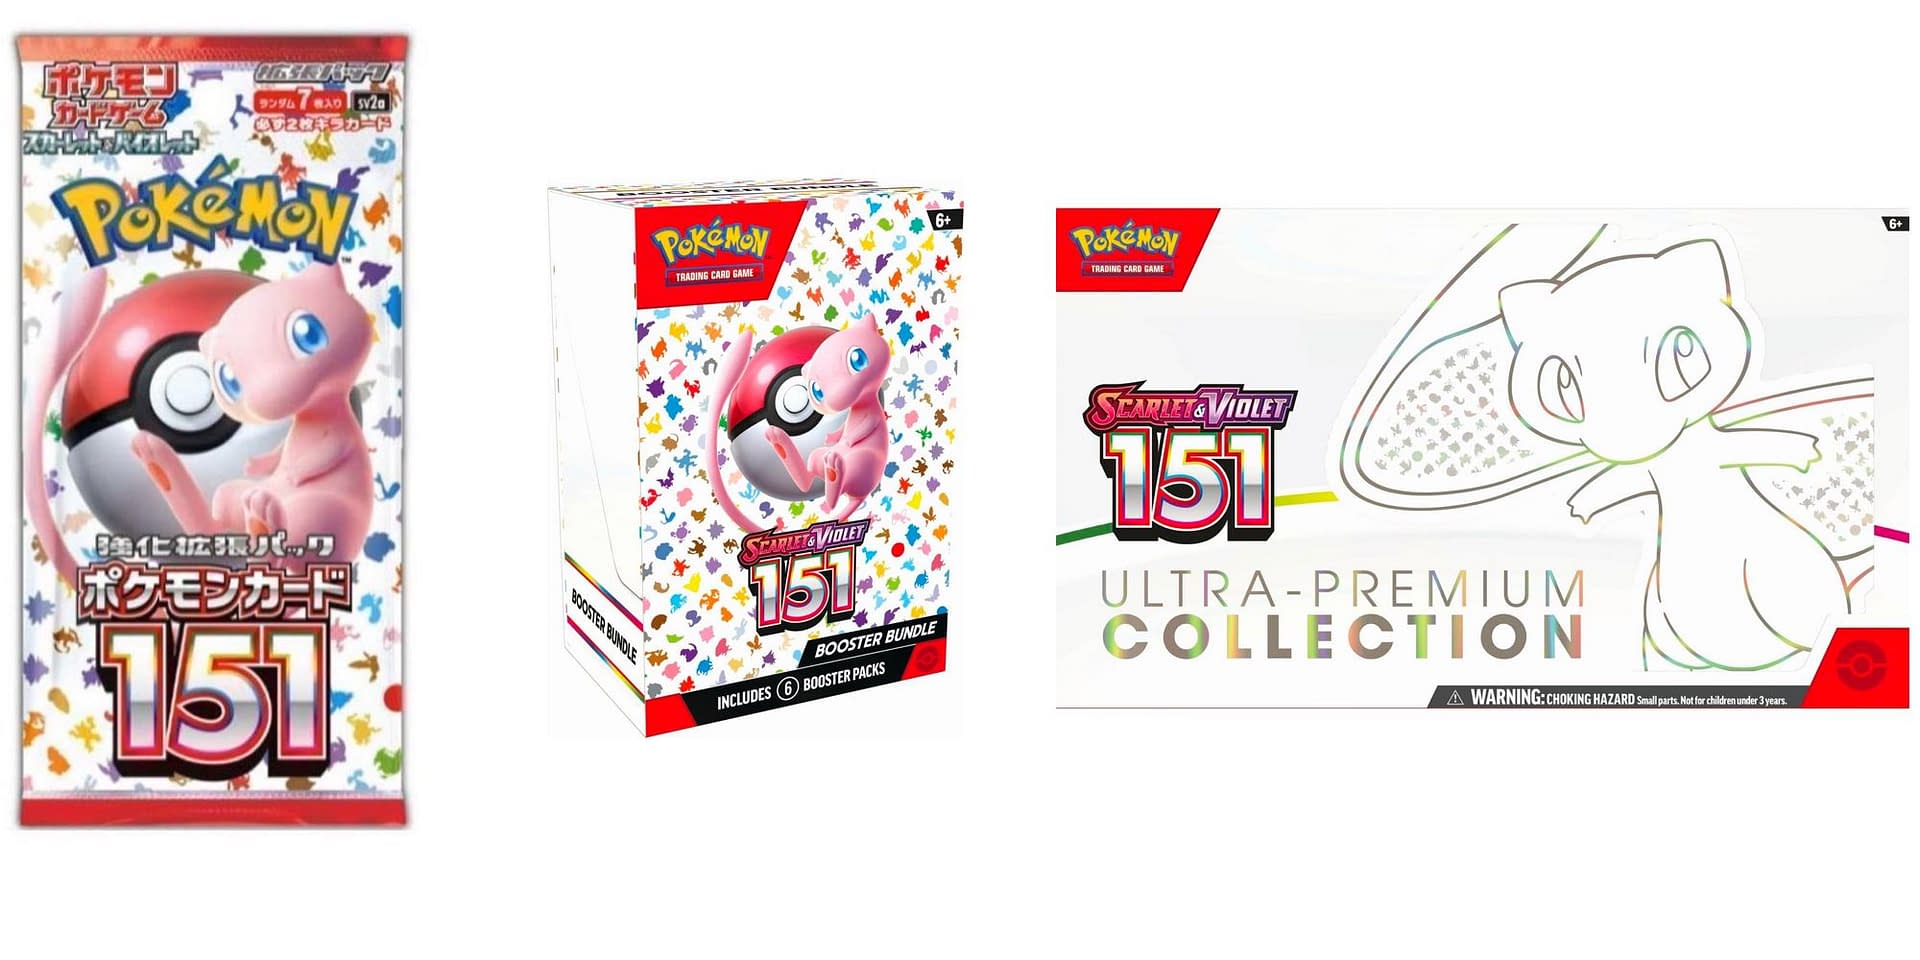 Pokémon TCG Japan's Pokémon Card 151: The English Version